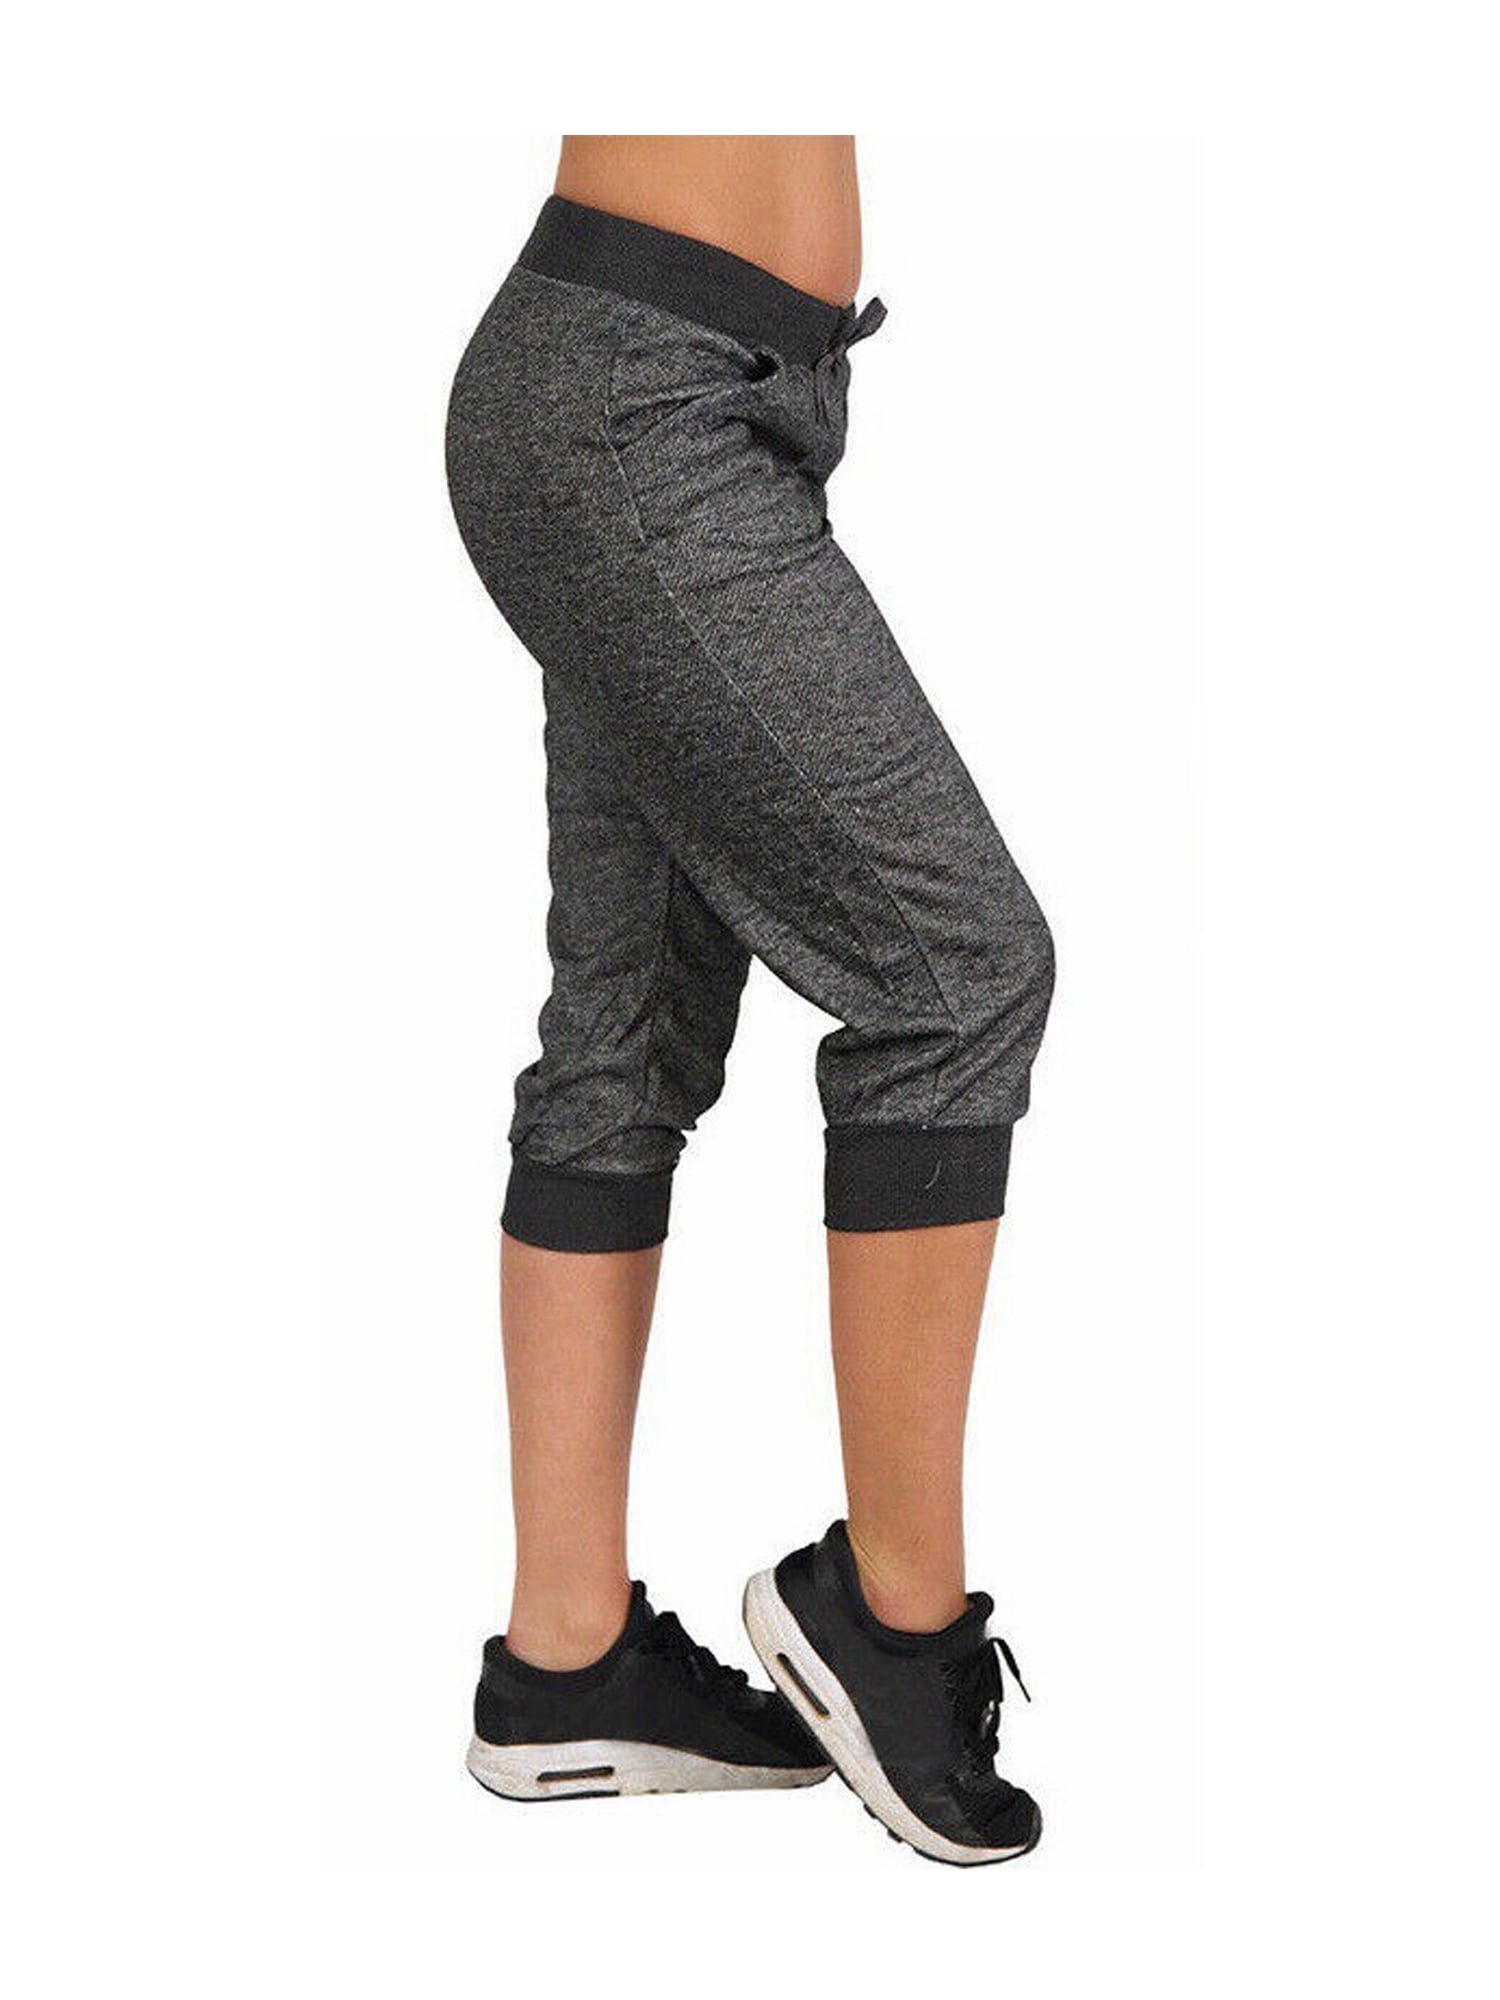 JYYYBF Women's Sweatpants Capri Pants Cropped Jogger Running Pants Yoga  Fitness Sports Trousers Dark Grey XL 